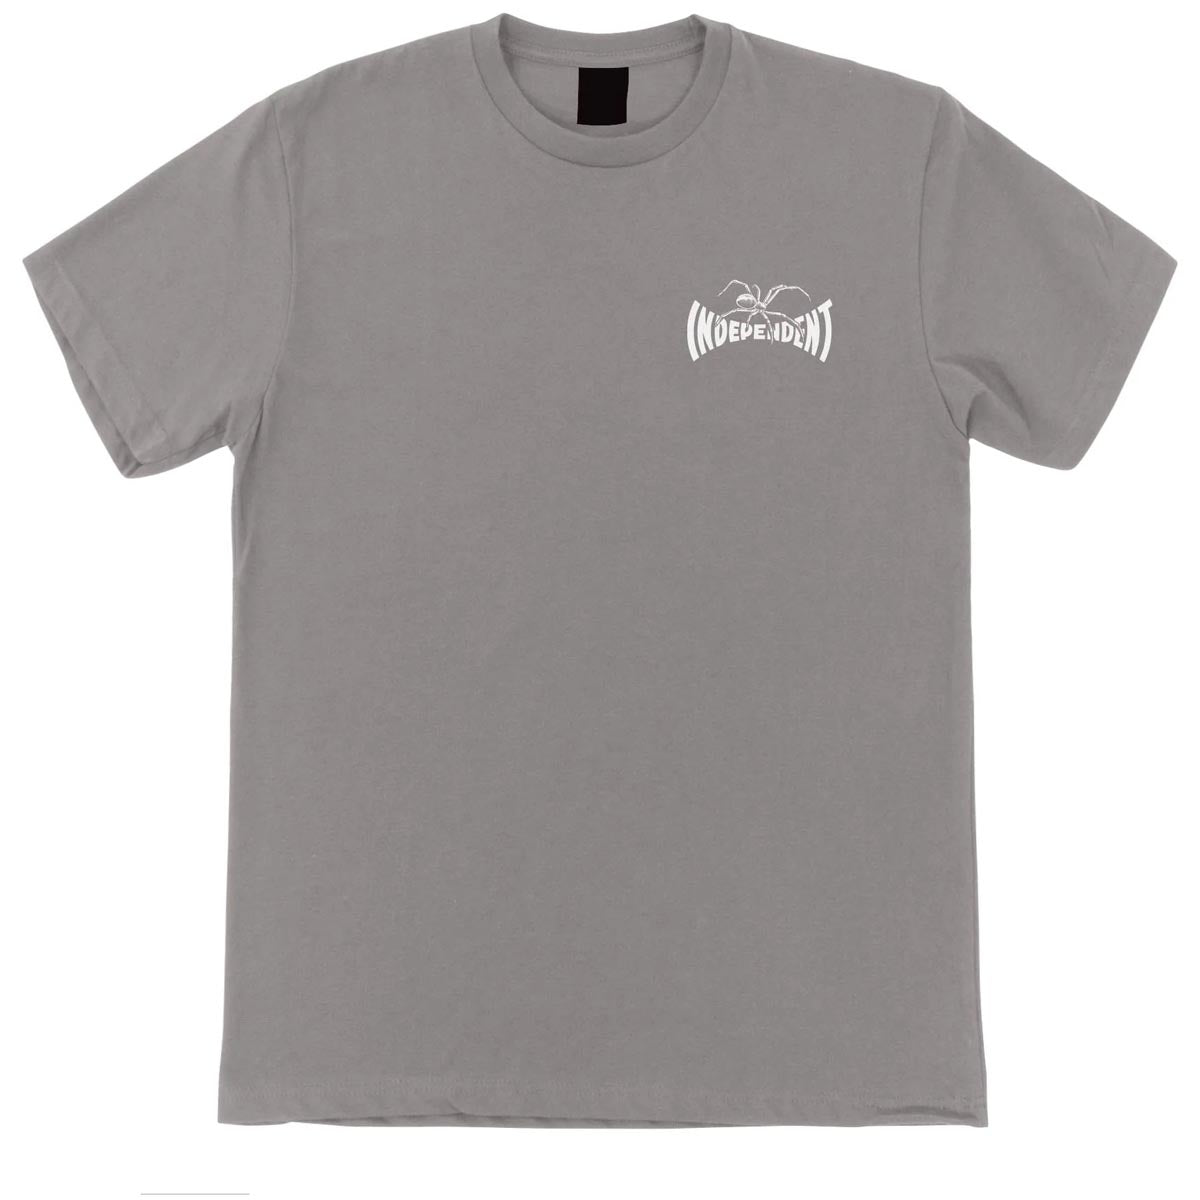 Independent Arachnid T-Shirt - Medium Grey image 2